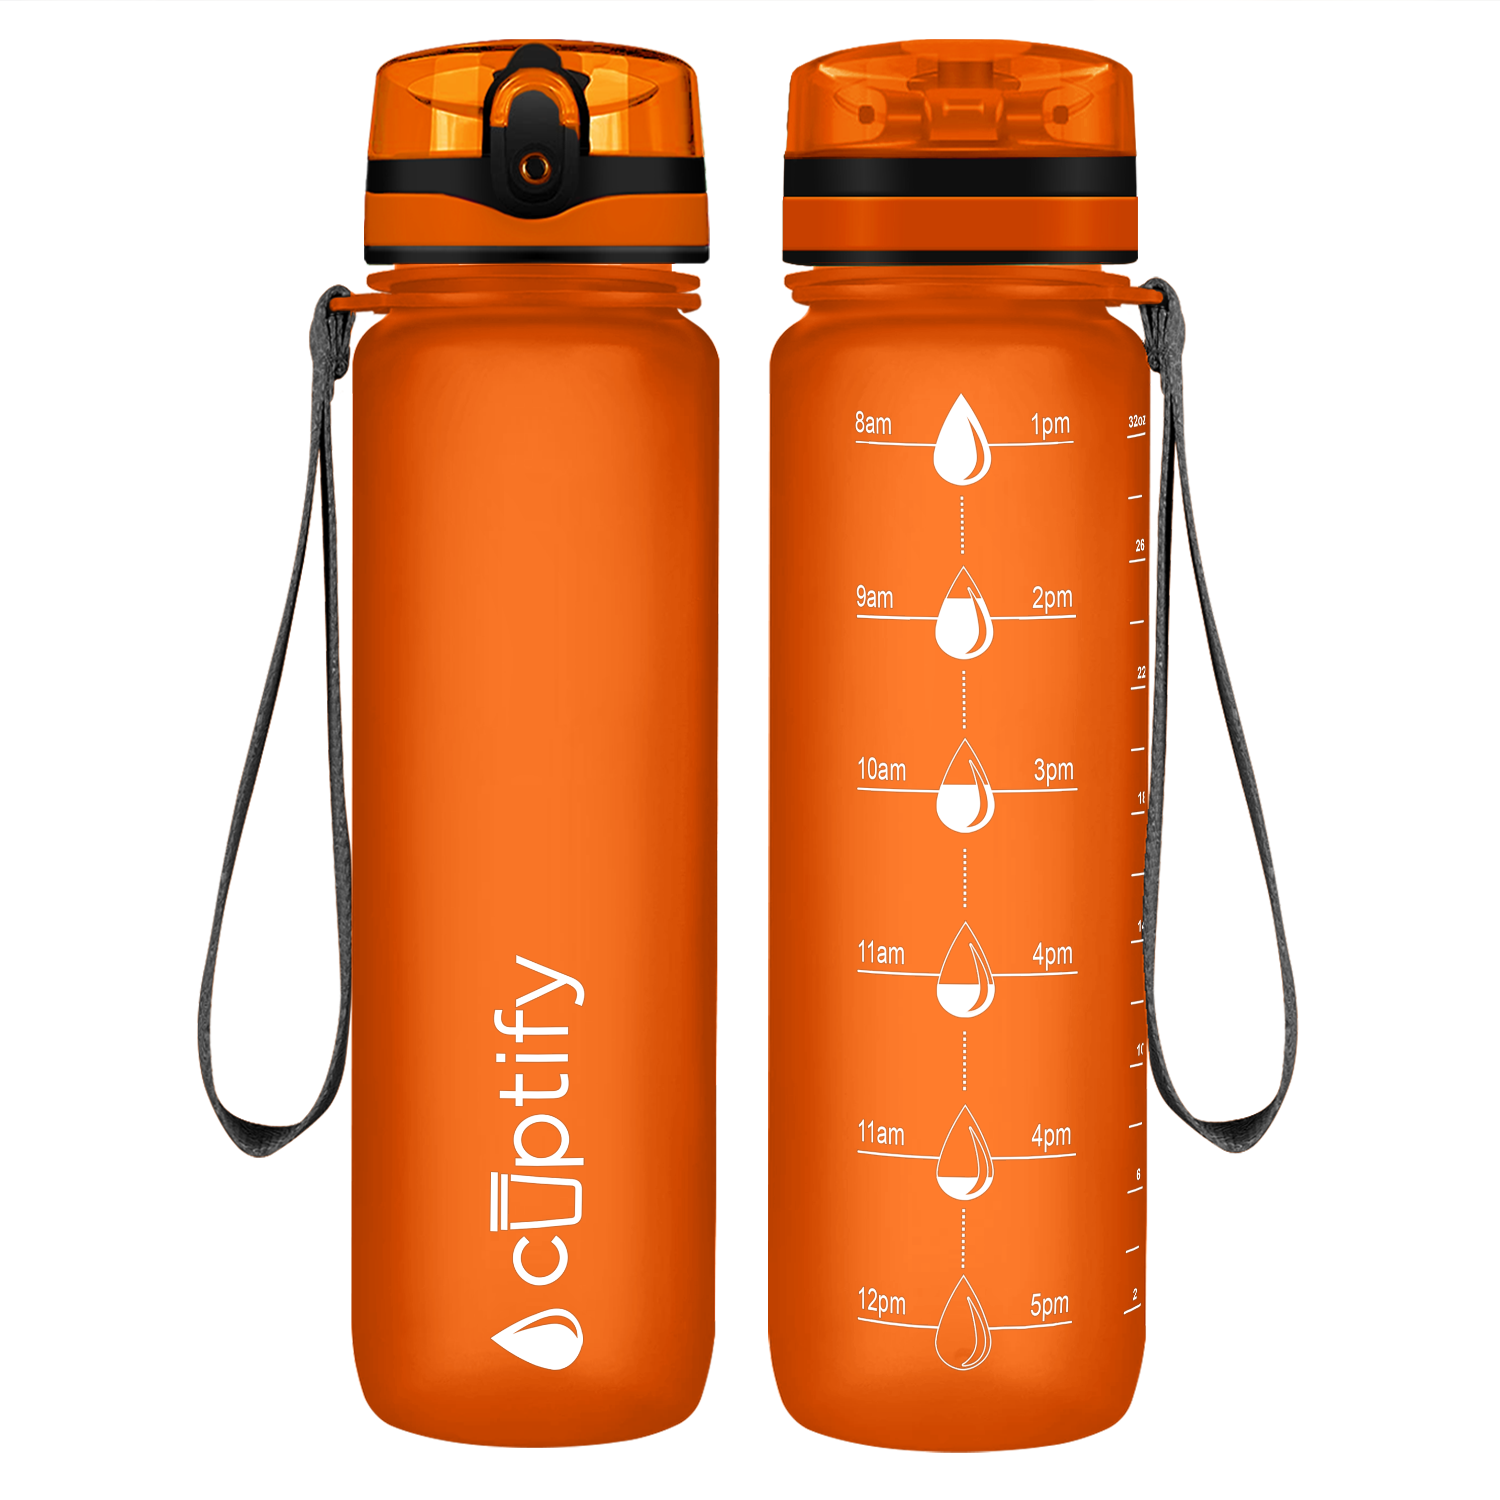 Cuptify Orange Frosted Hydration Tracker Water Bottle